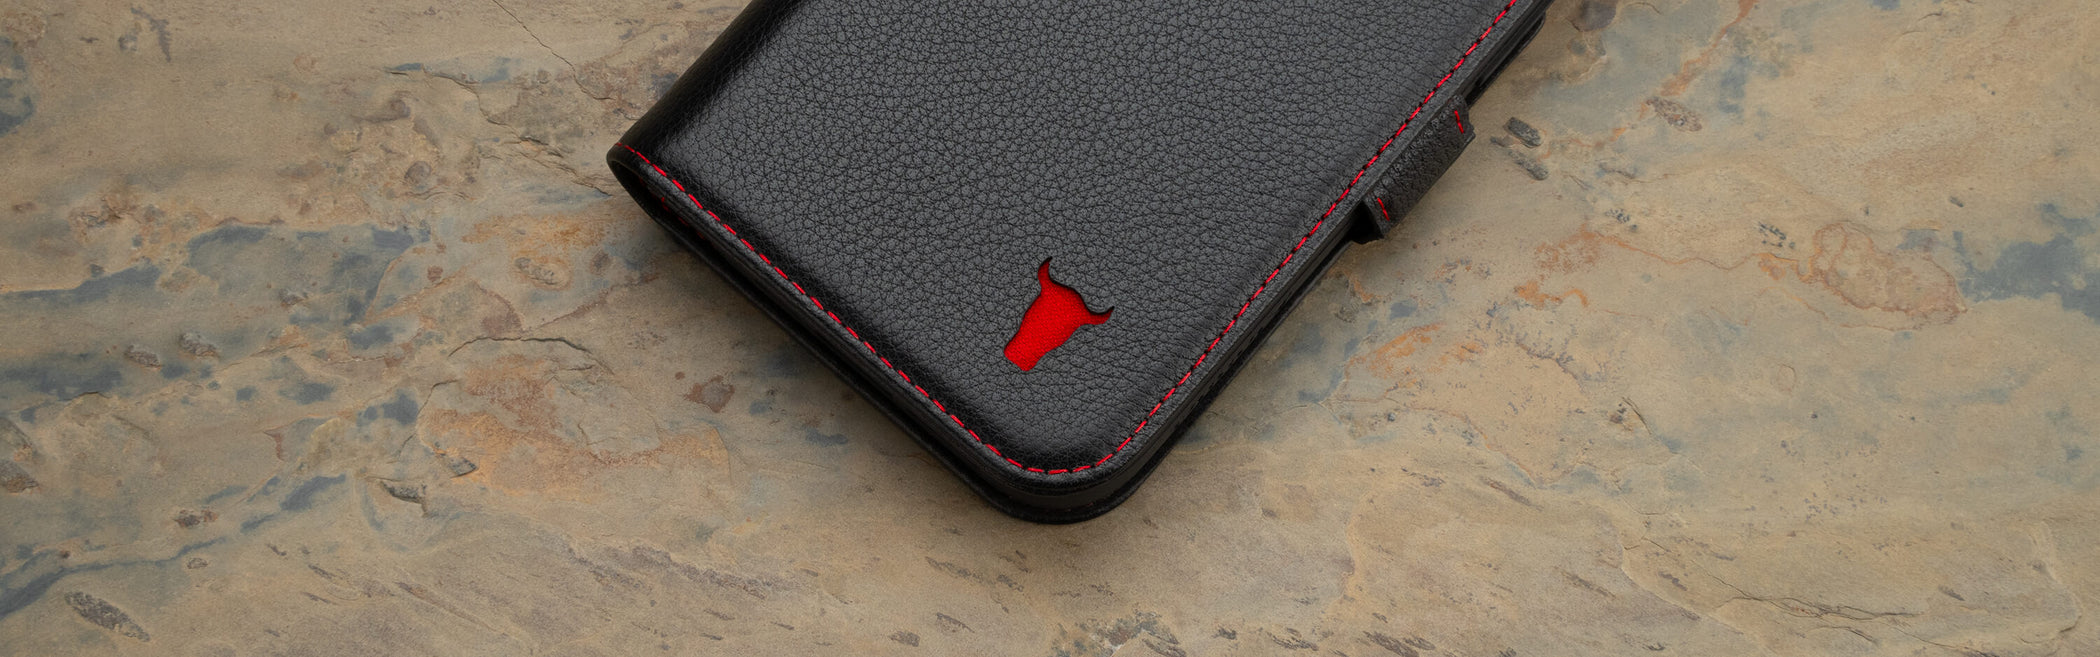 Leather Phone Cases / iPad Cases / Accessories